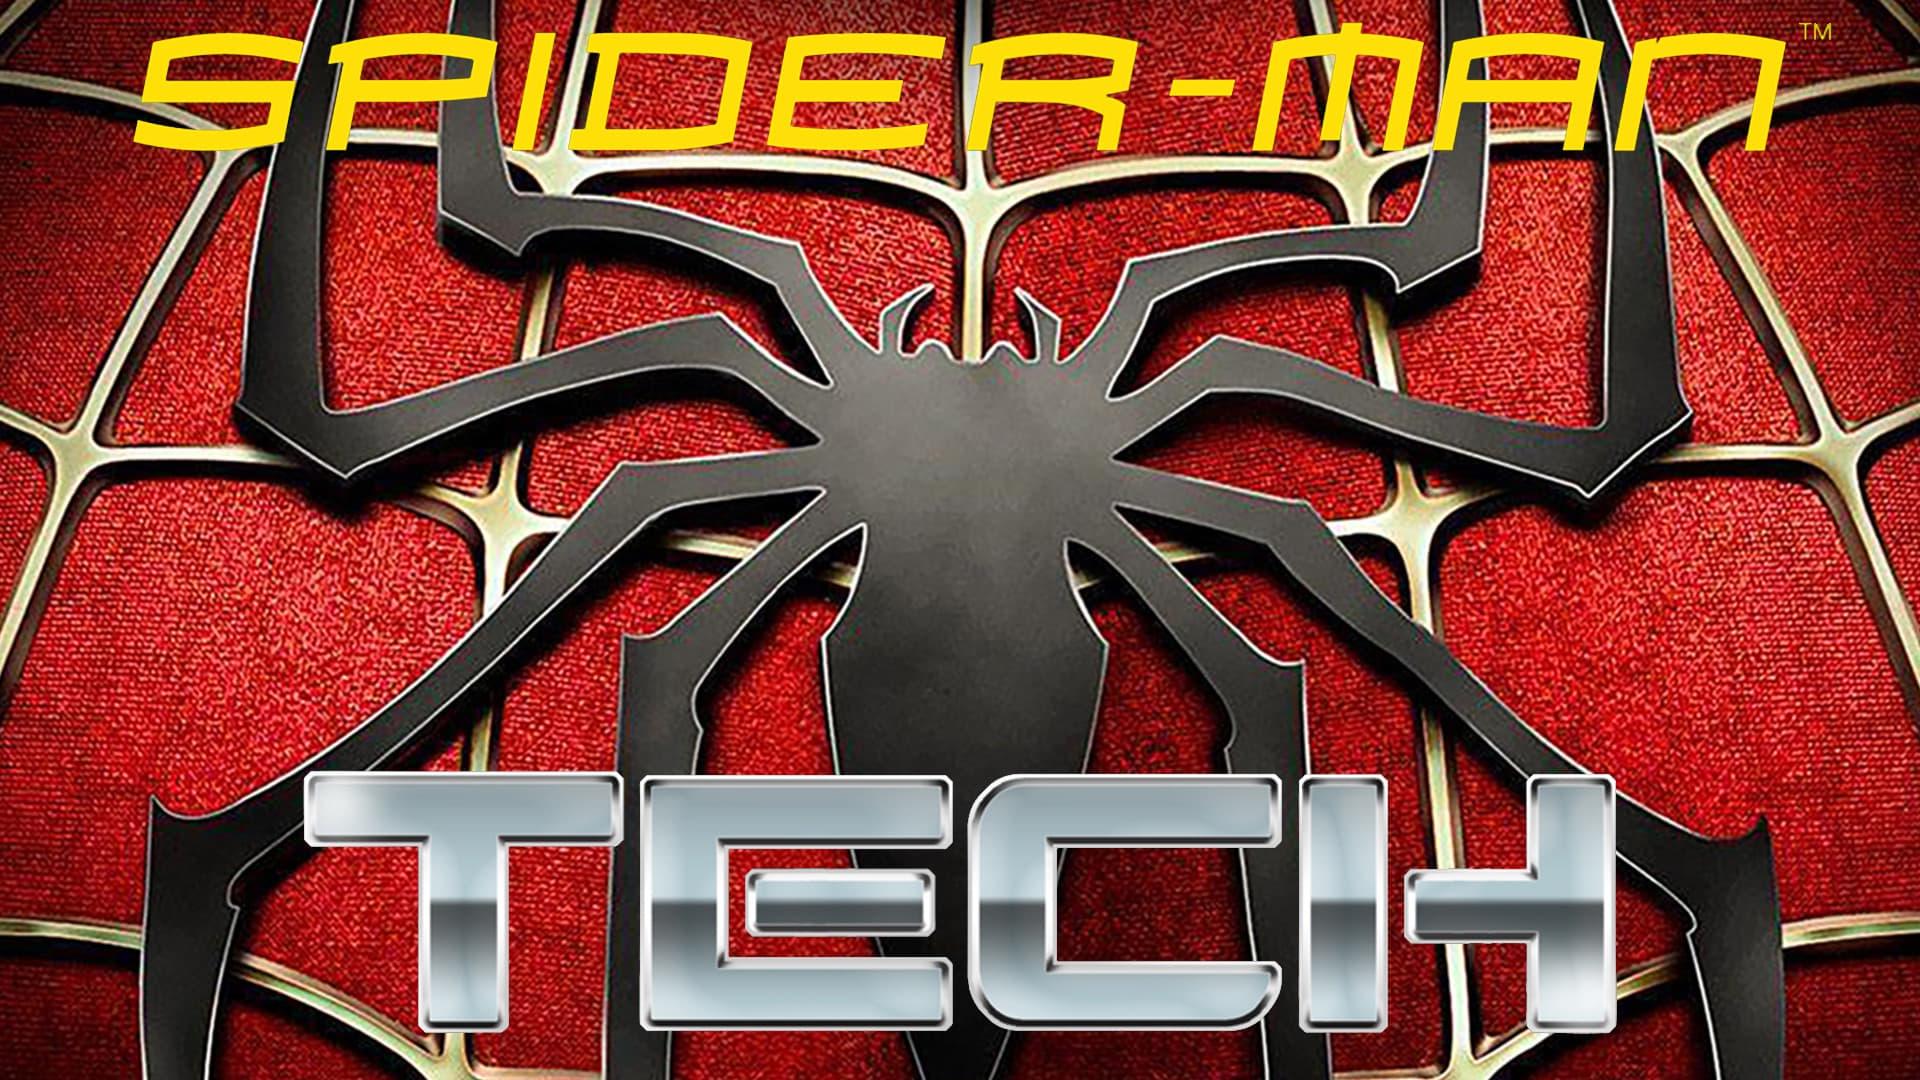 Spider-Man Tech backdrop